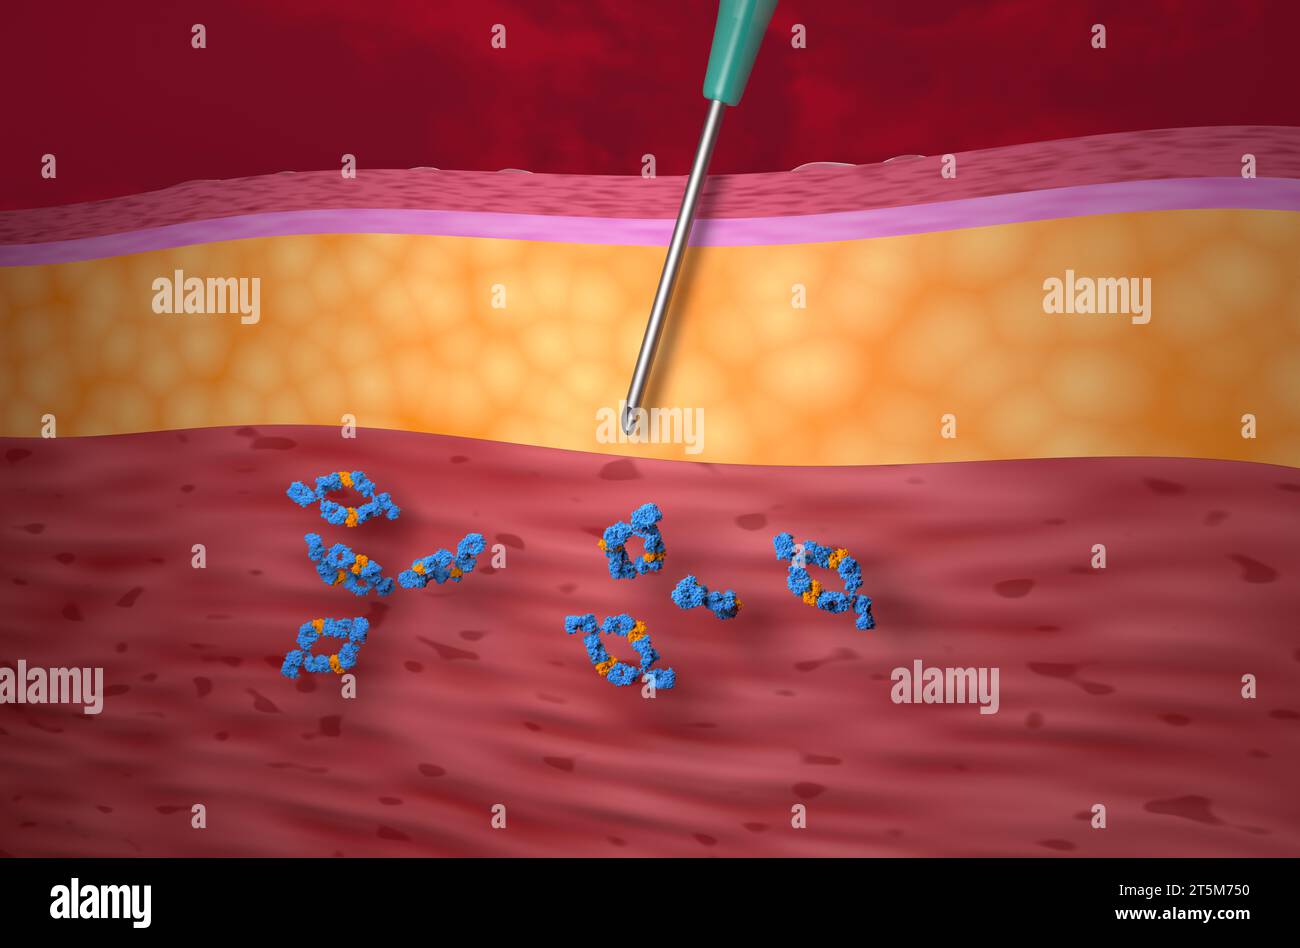 Monoclonal antibody treatment (Adalimumab) - closeup view 3d illustration Stock Photo